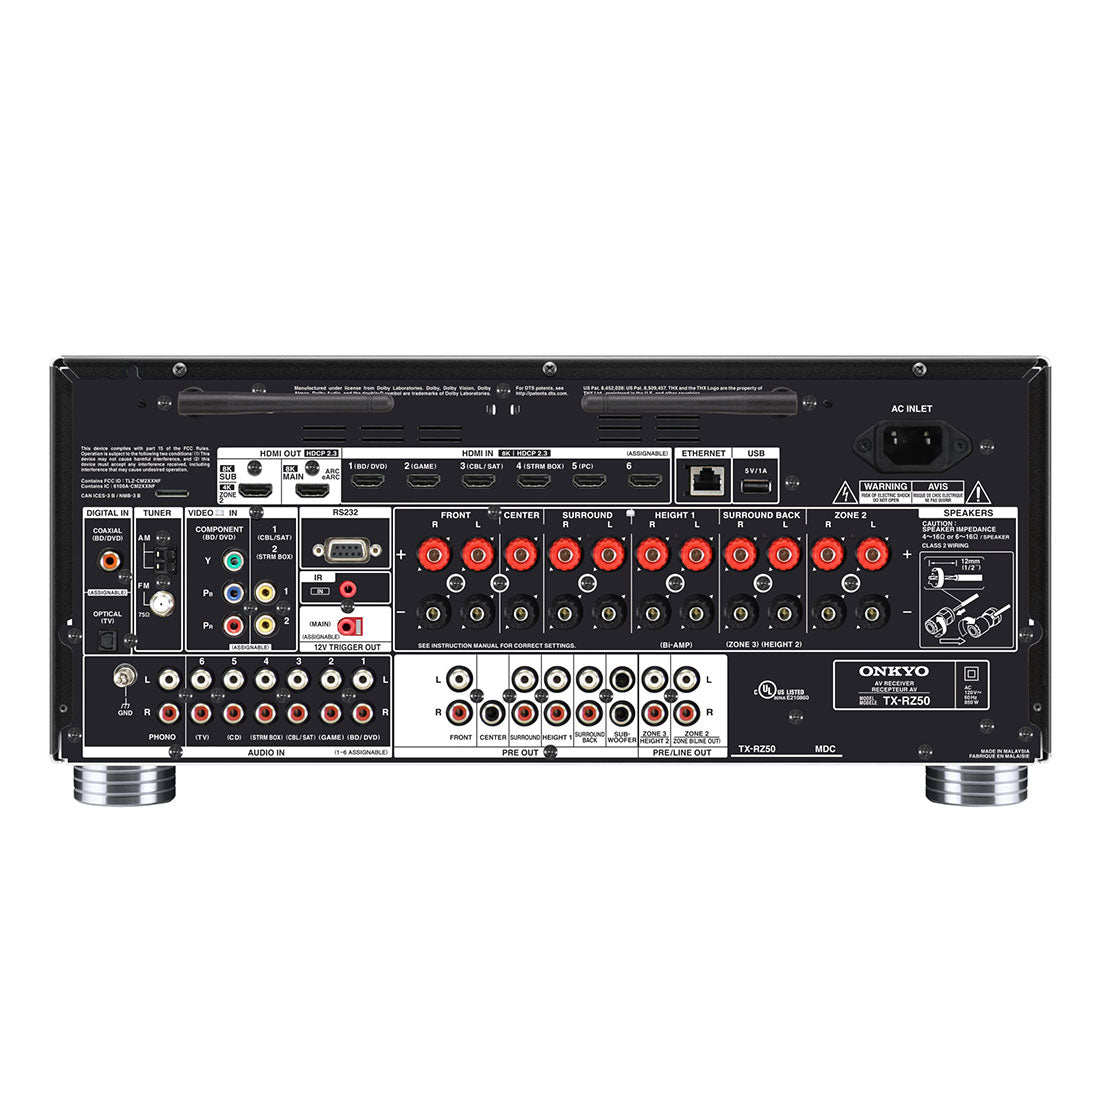 Onkyo TX-RZ50 9.2 Channel Network A/V Receiver | Paradigm MONITOR SE 6000F 5.0 Speaker Bundle #1 – Black